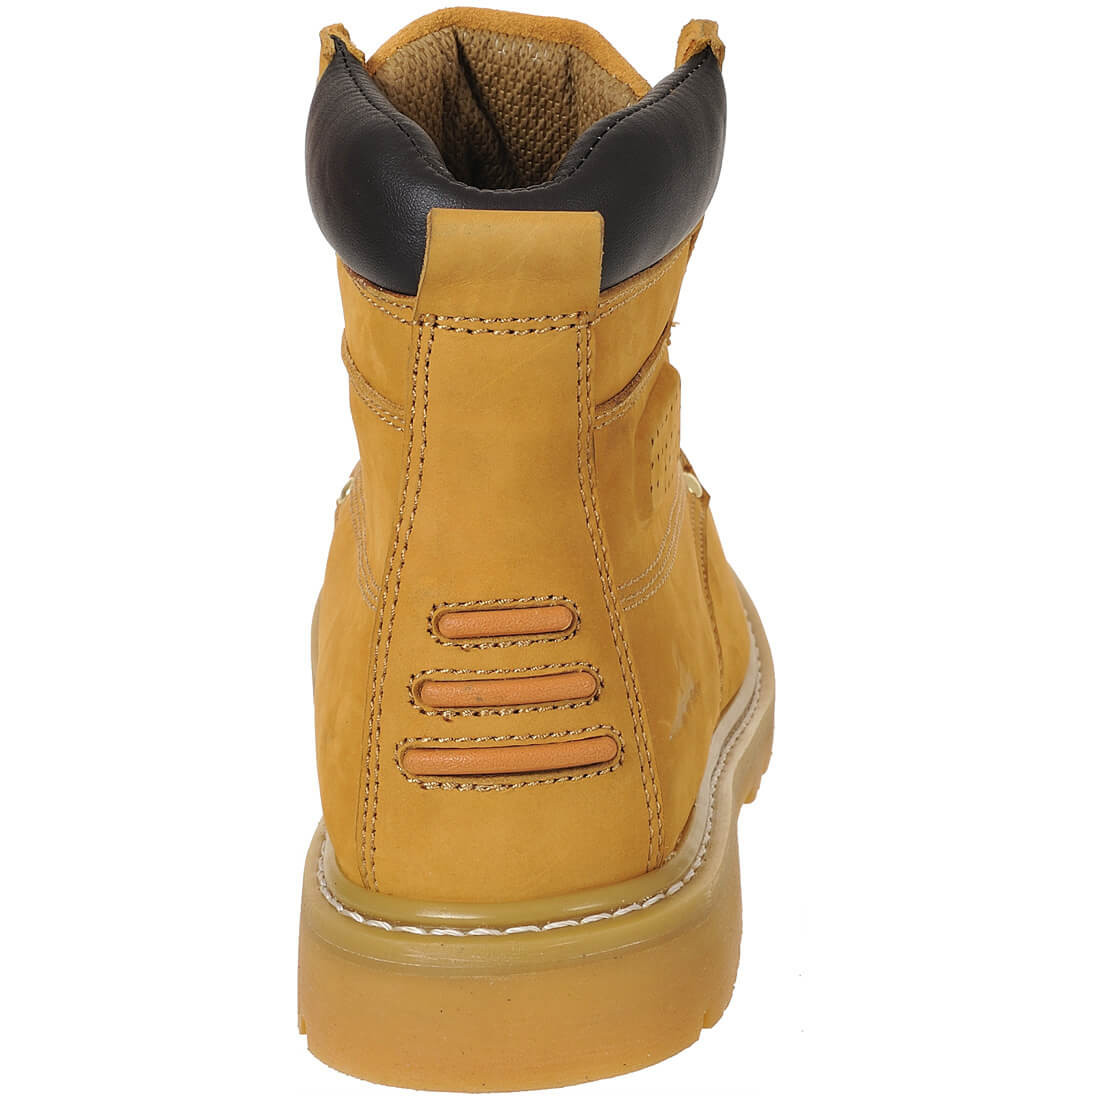 Brodequin Nubuck Steelite™ SBP HRO - Les chaussures de protection